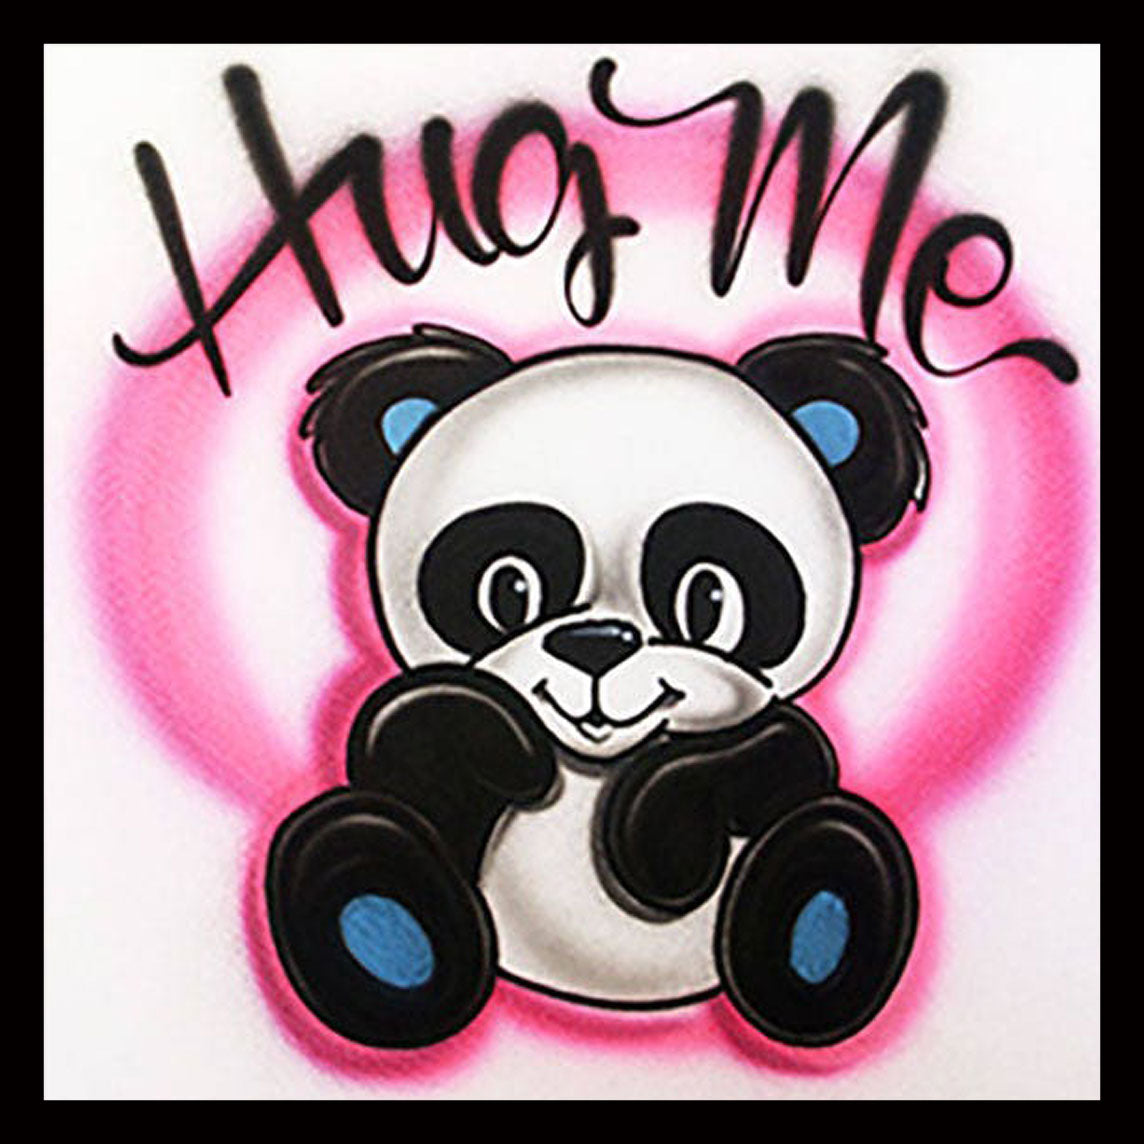 Airbrushed T-shirt * Hug Me Panda * Your Name/Word